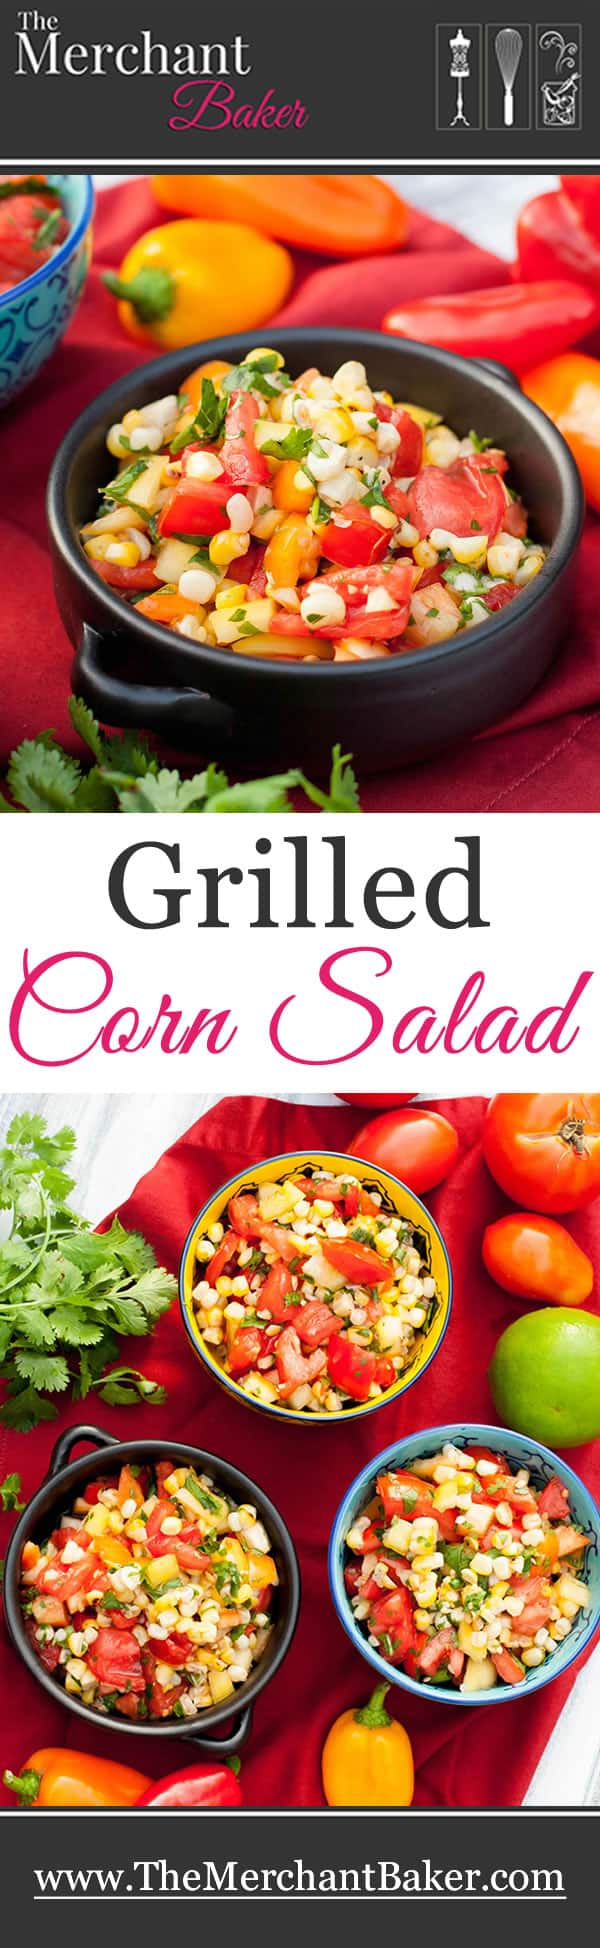 grilled-corn-salad